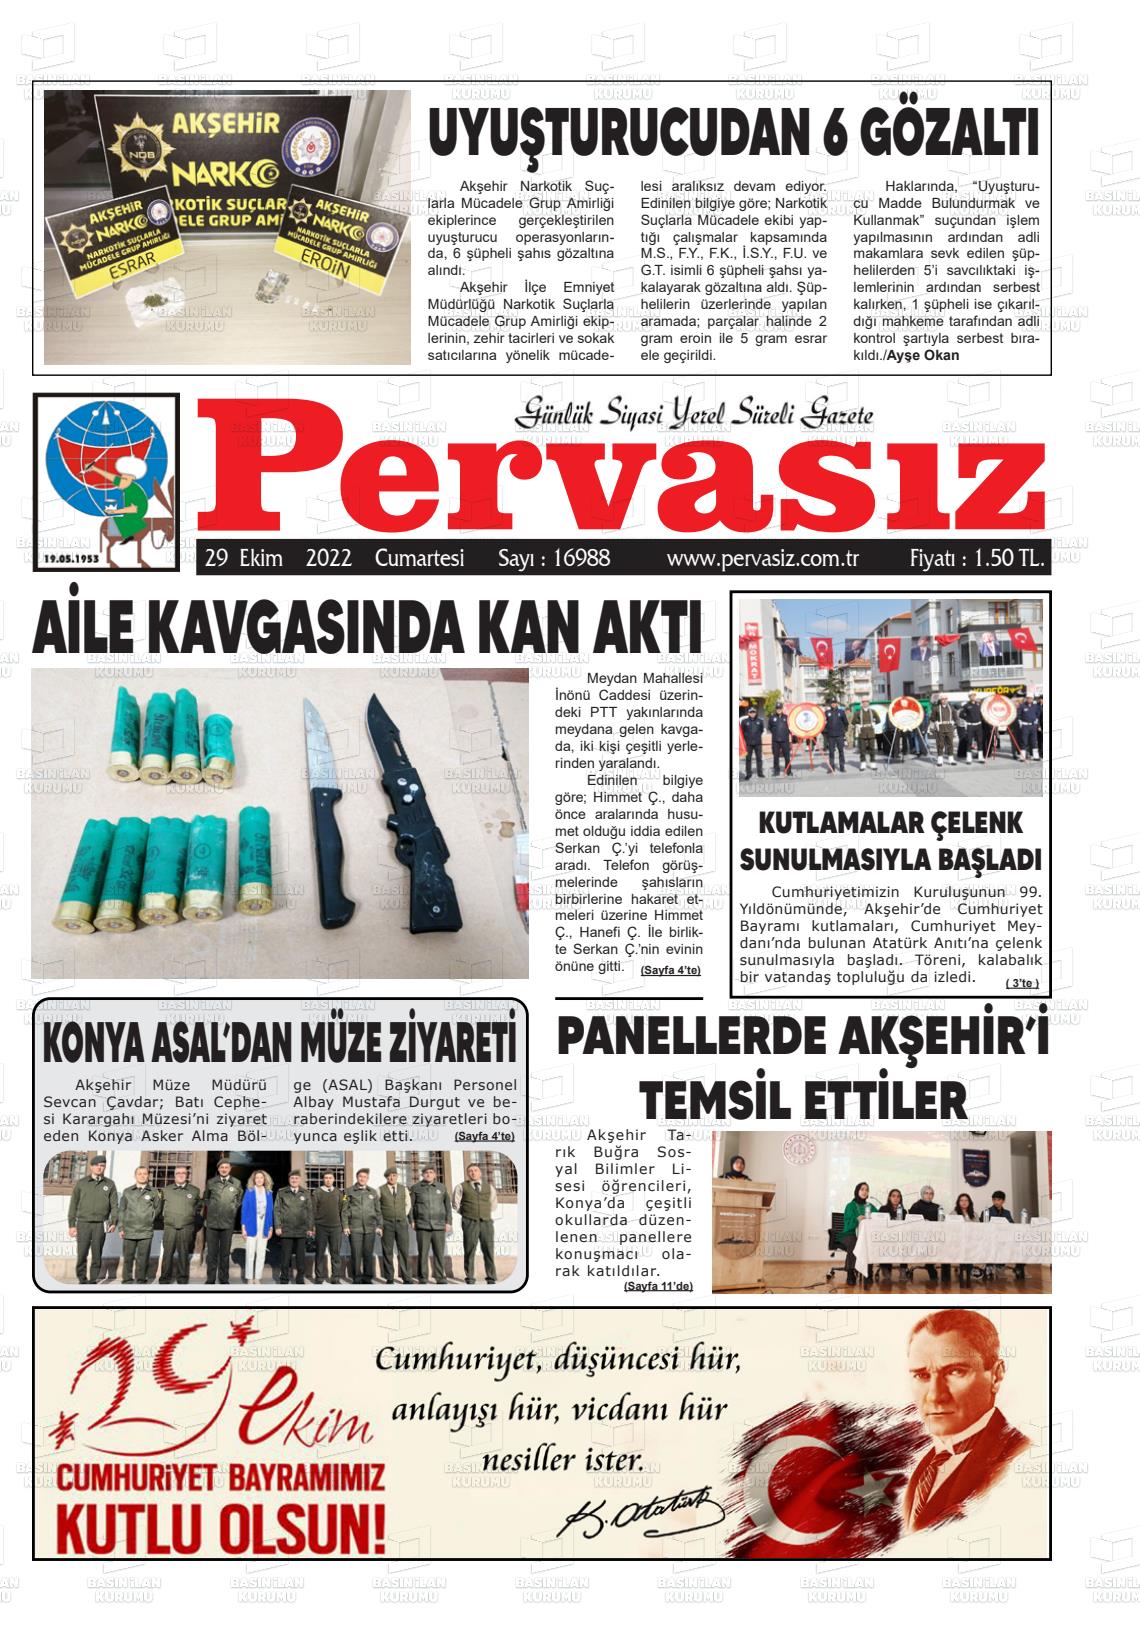 Pervasız Gazetesi added a new photo ...